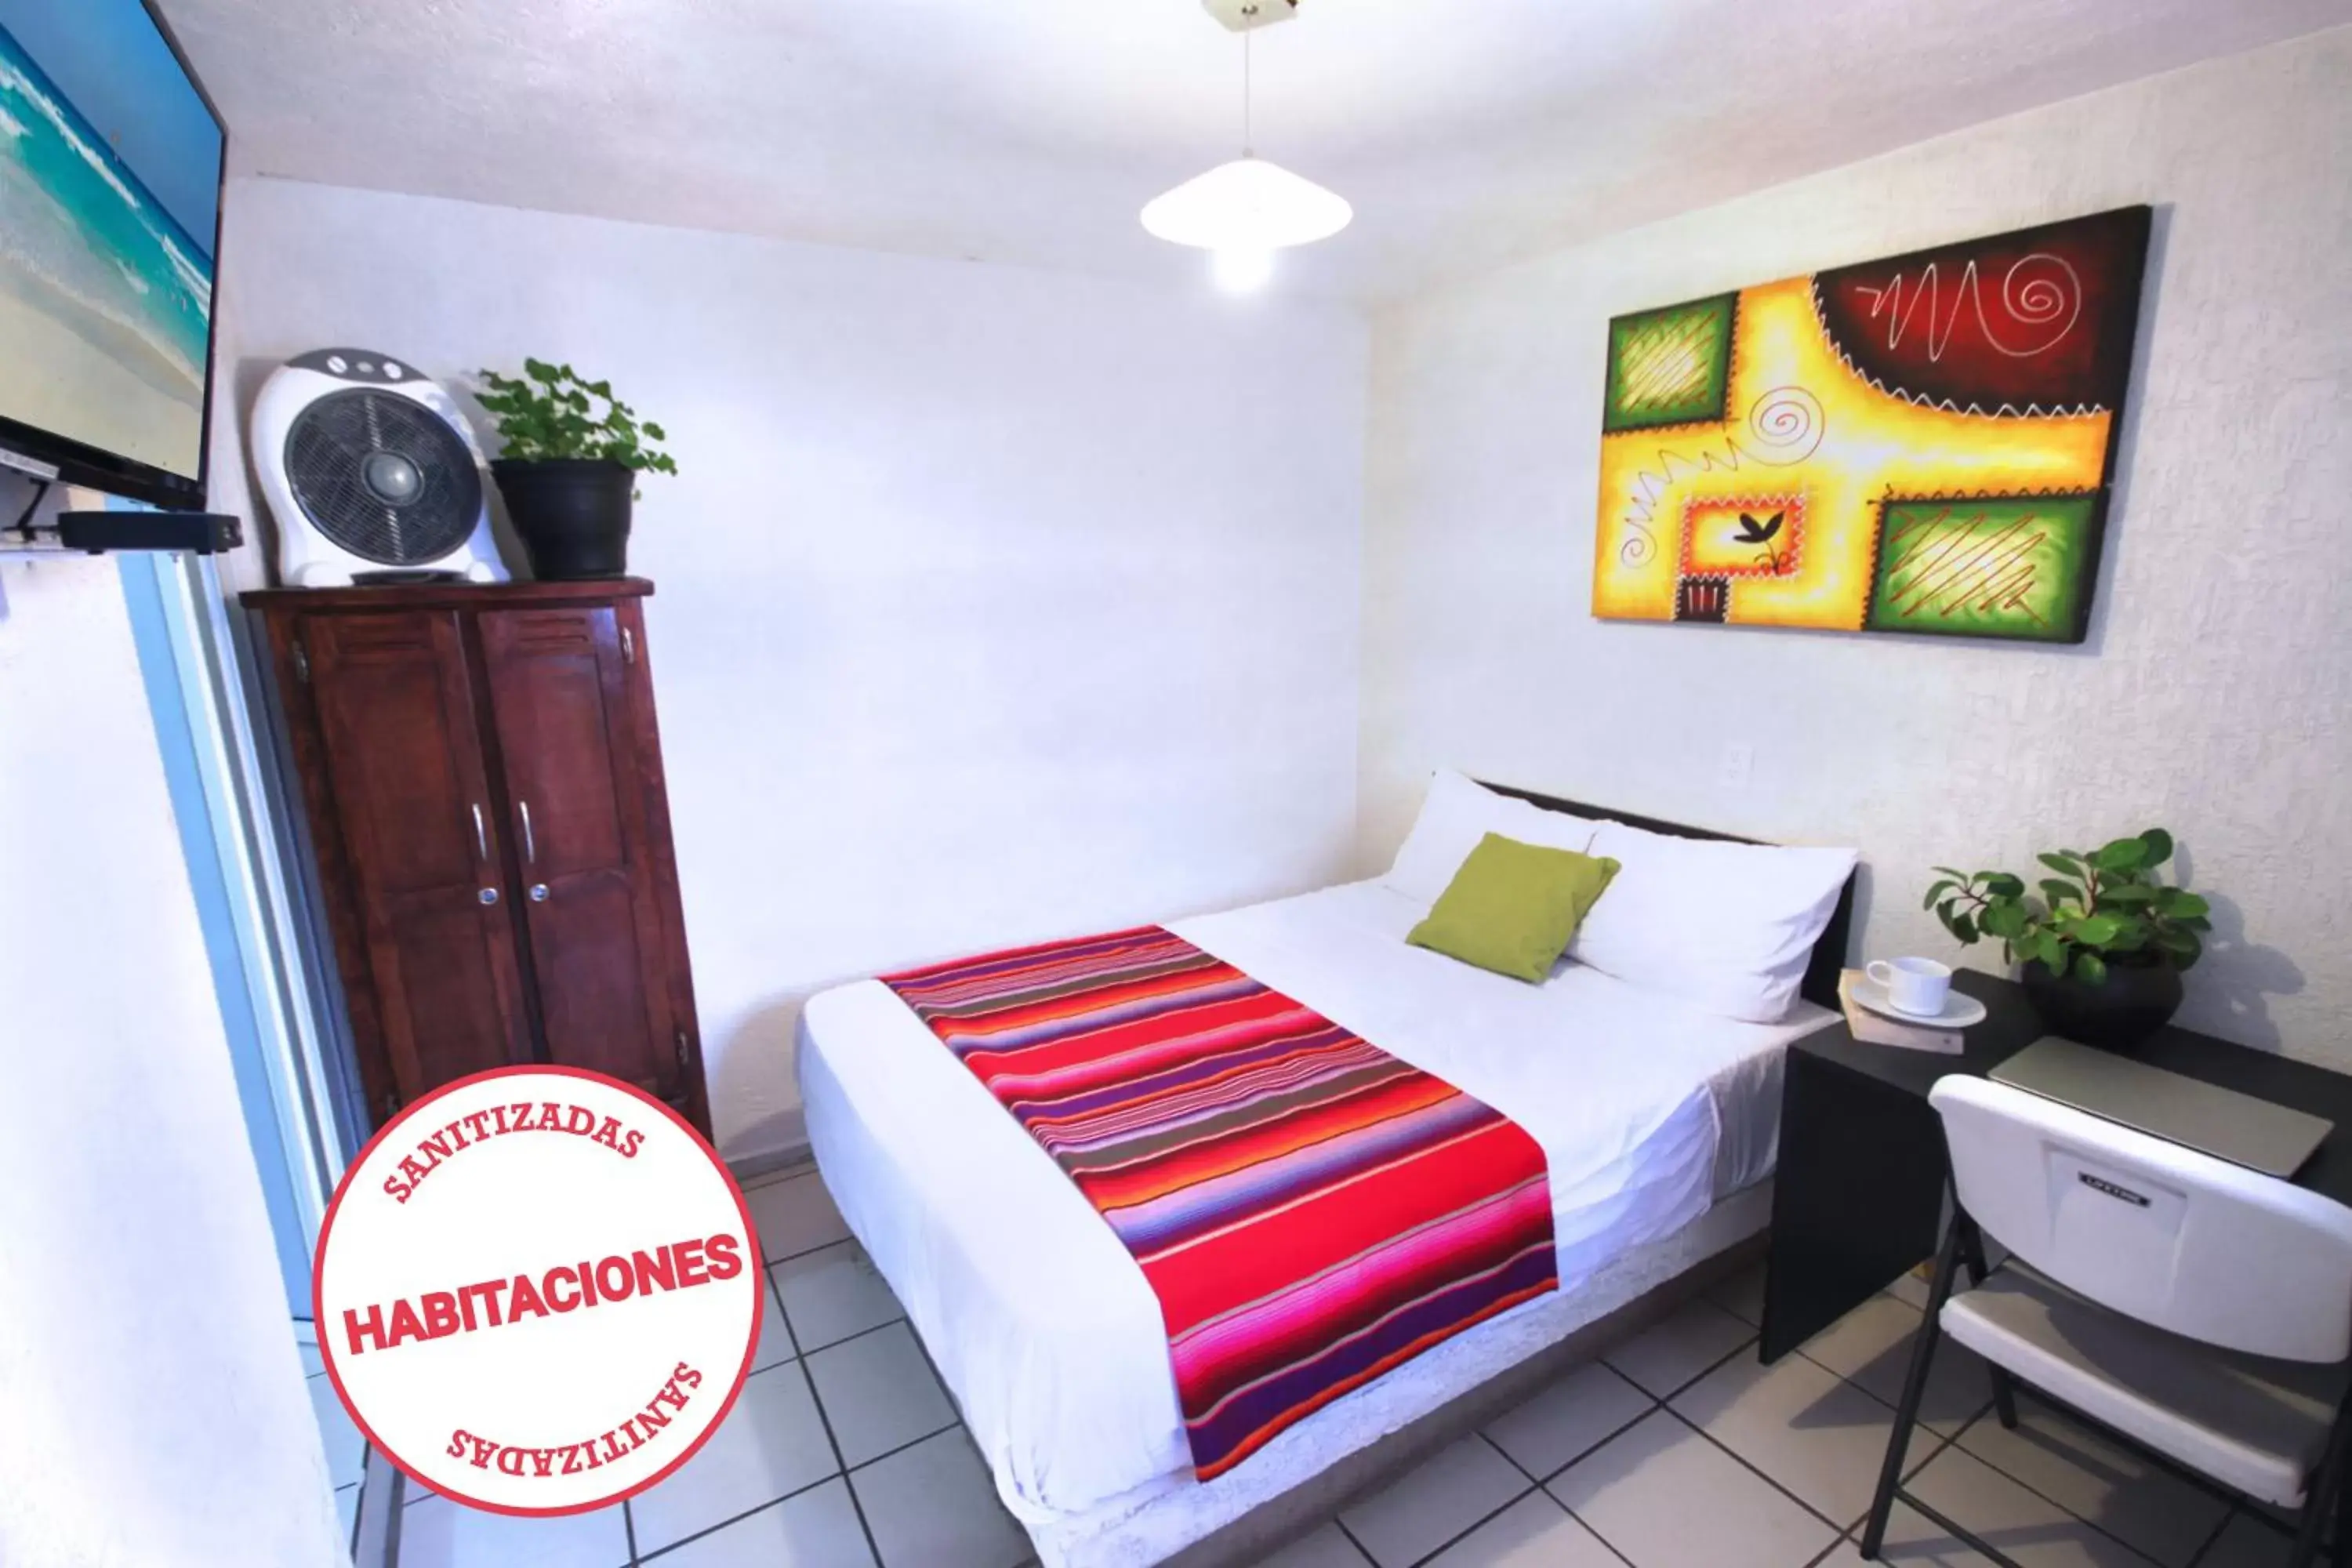 Bed, Room Photo in Hotel del Refugio